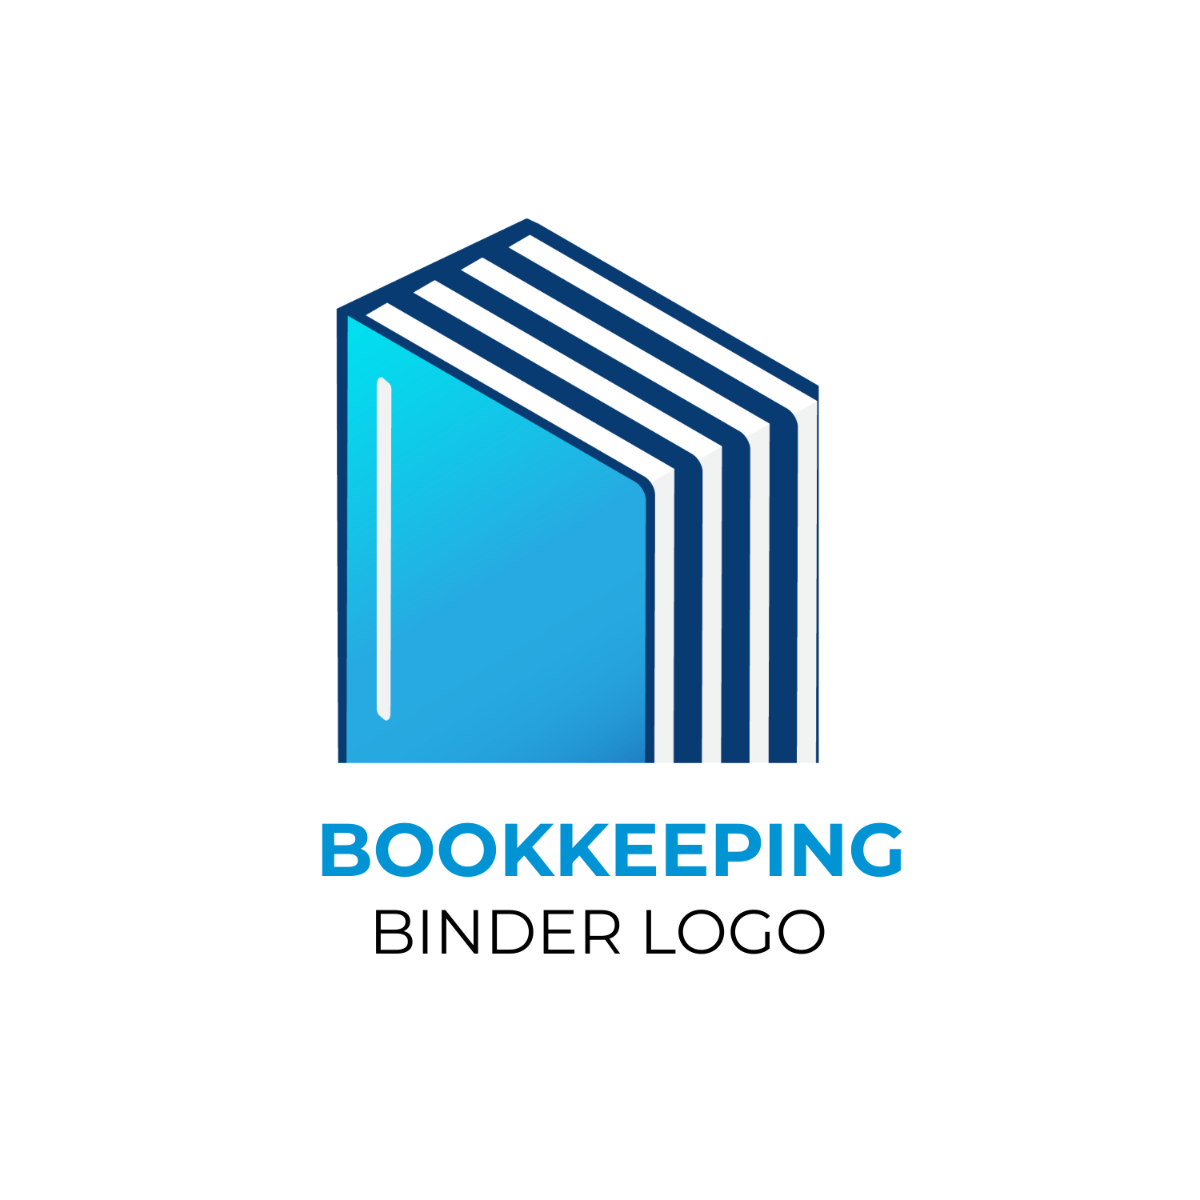 Bookkeeping Binder Logo Template